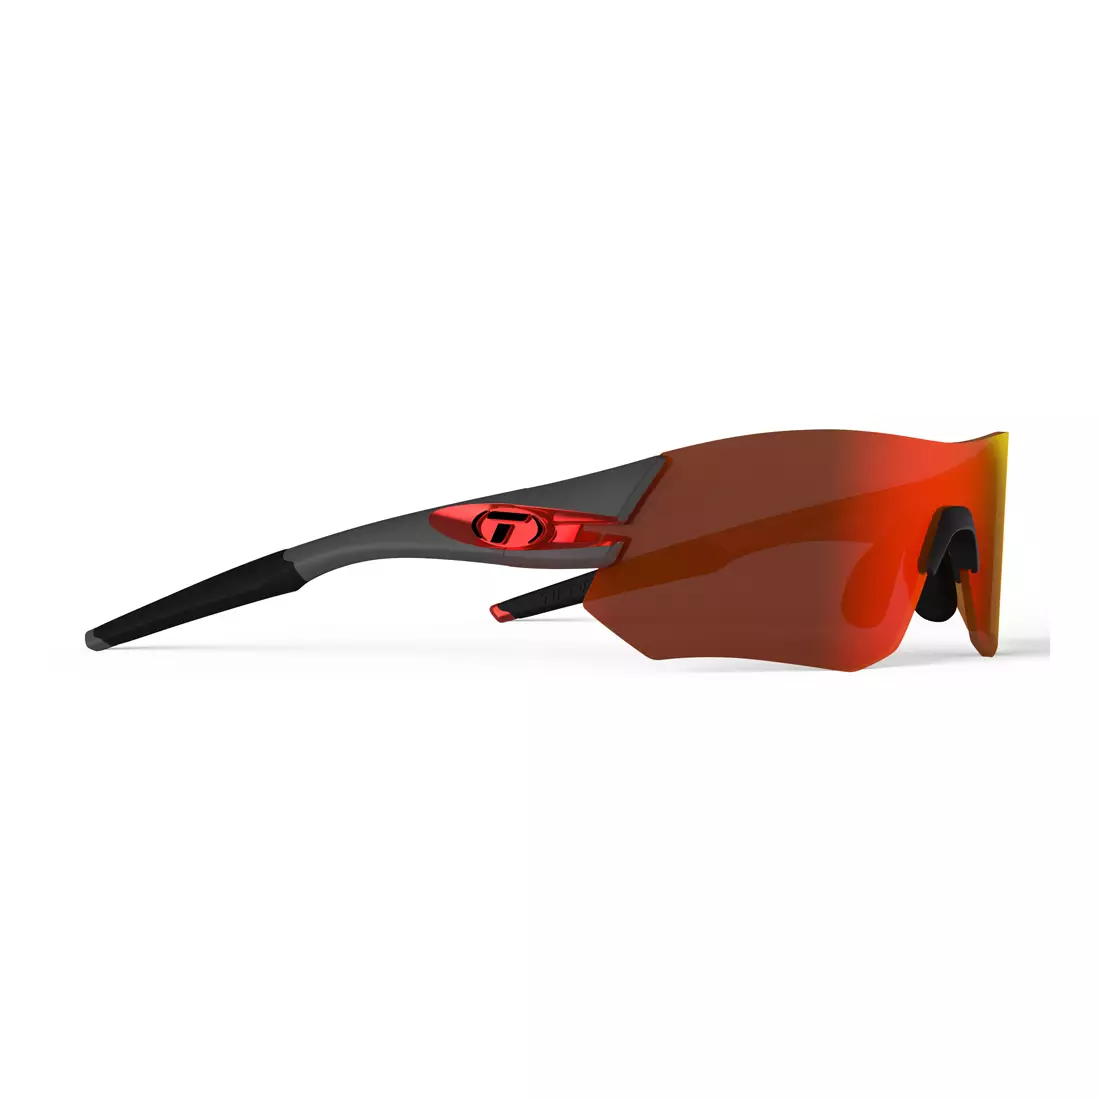 TIFOSI brýle s výměnnými skly TSALI CLARION (Clarion red, AC Red, Clear) gunmetal red TFI-1640109721